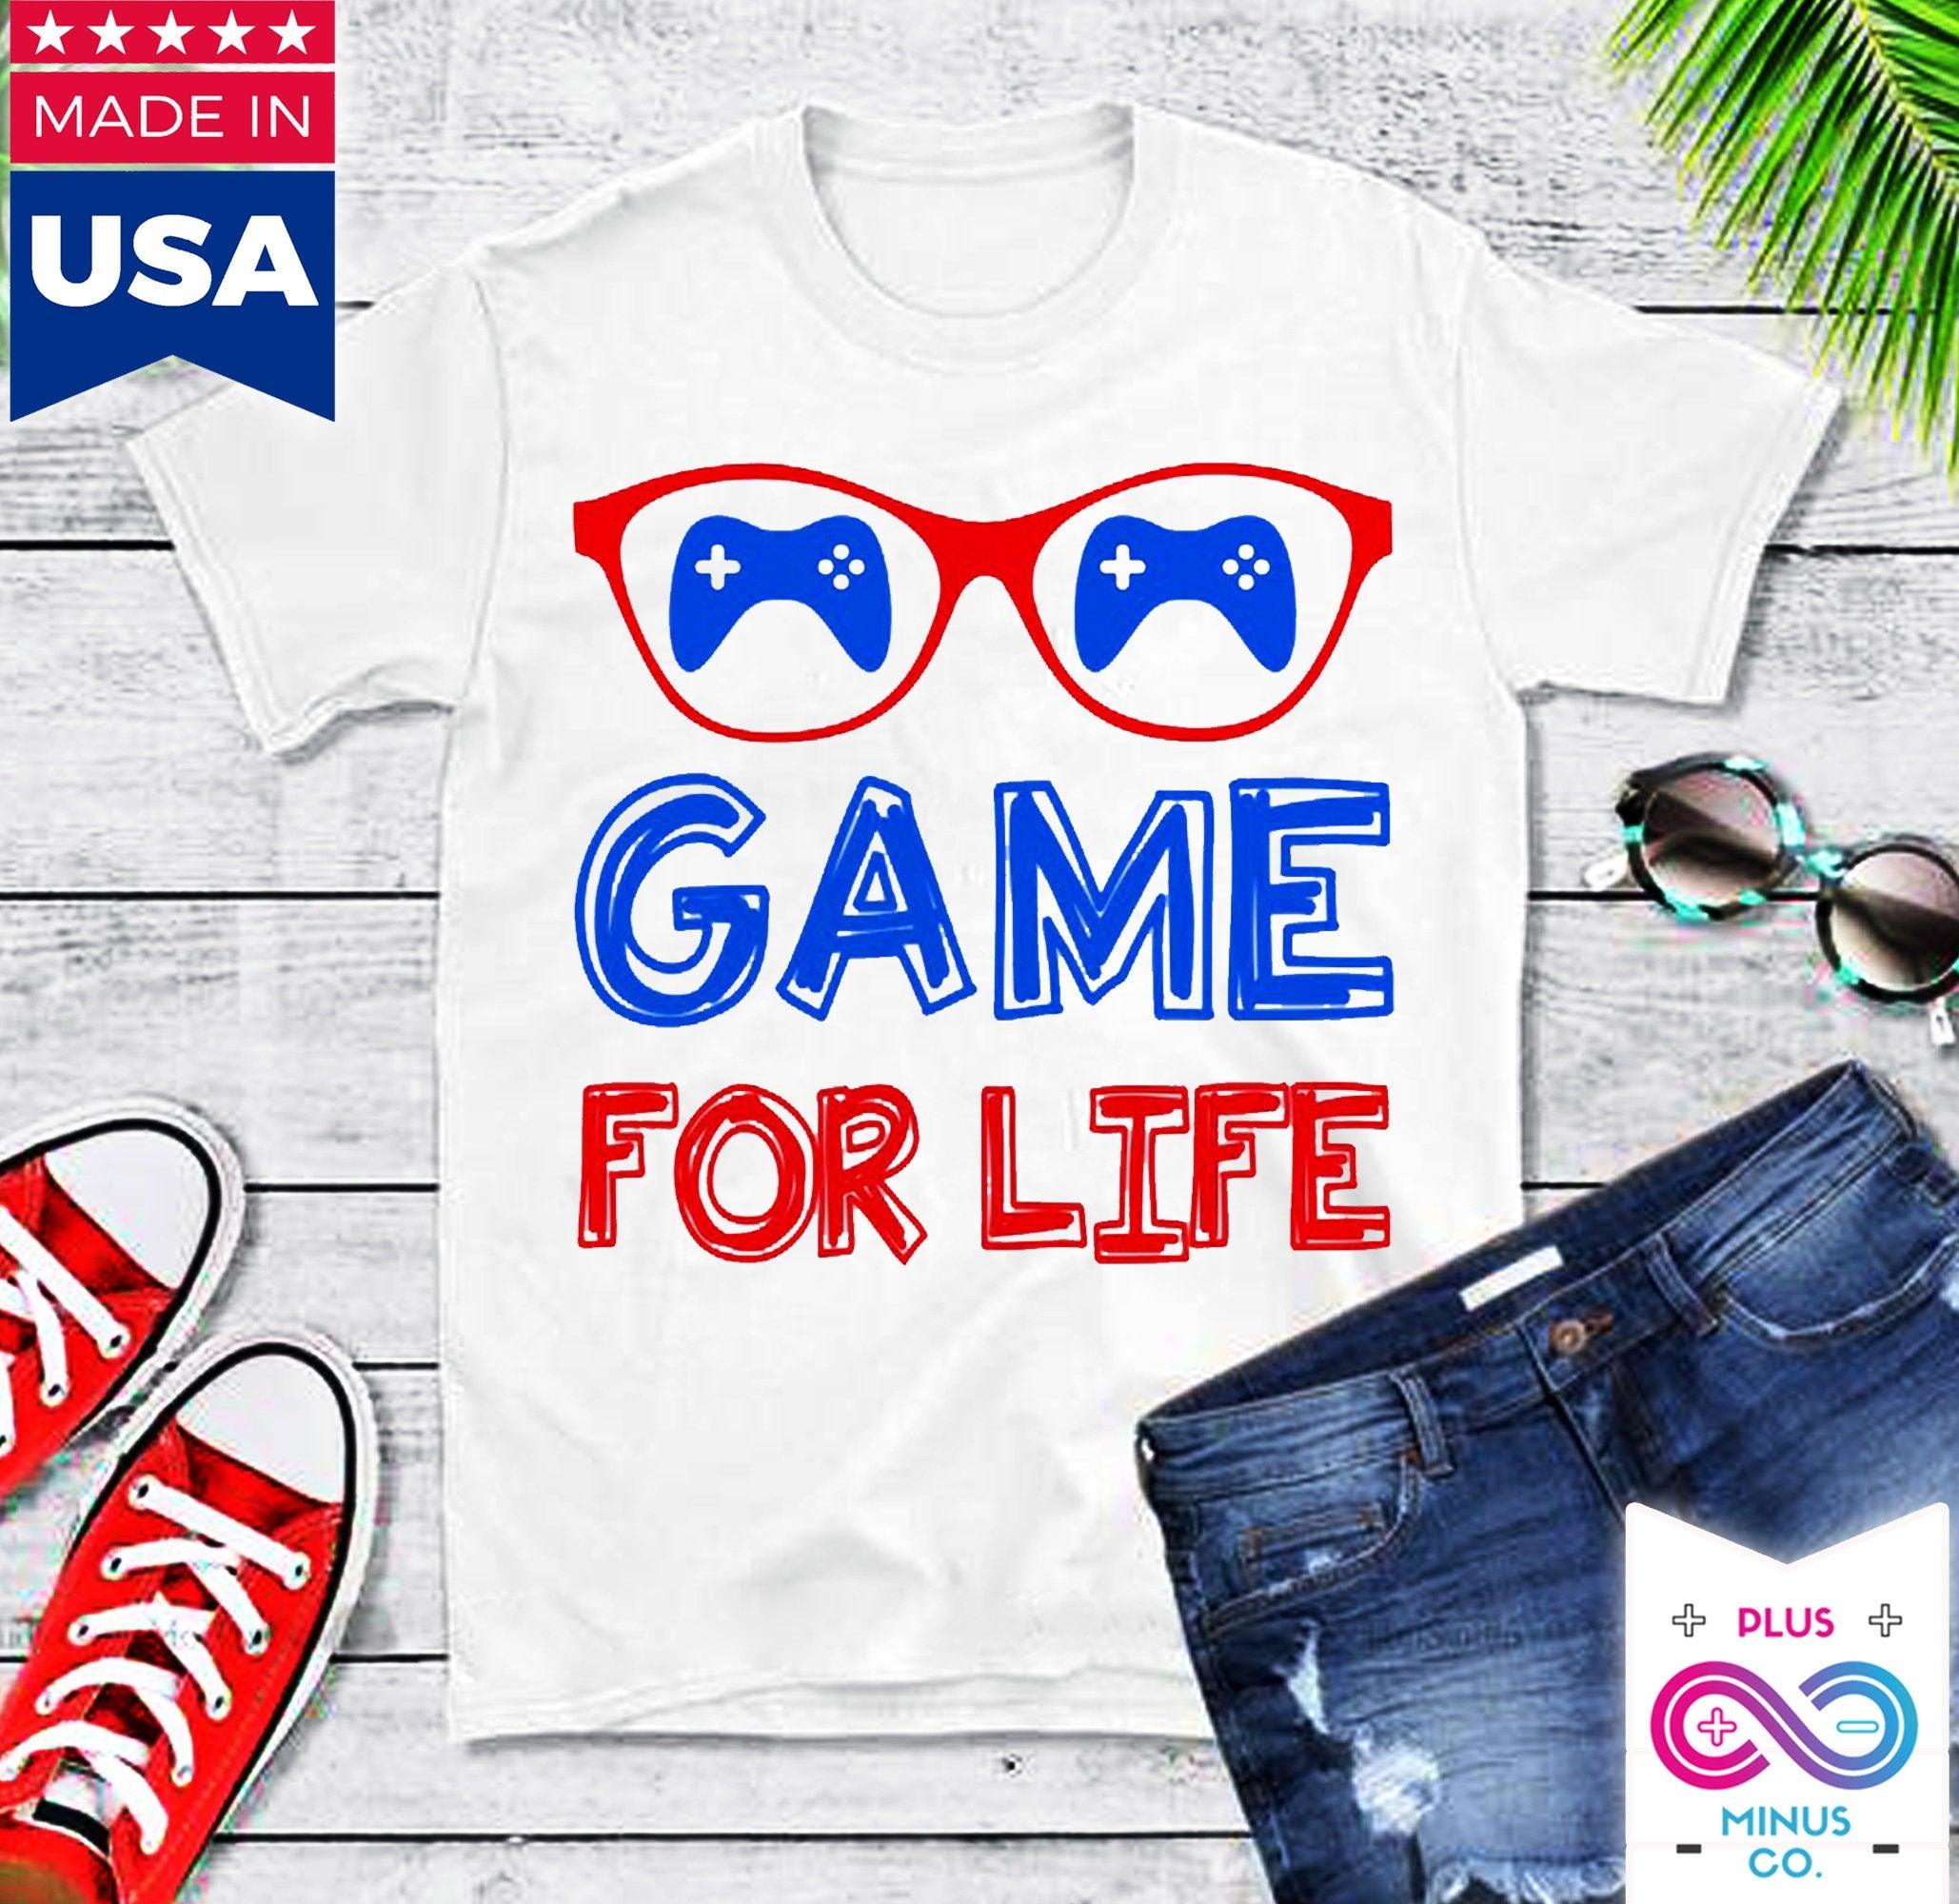 Game For Life T-Shirts || Gamer Shirt || Gaming Shirt || Game Life Shirt || Gamer Gift || Video Game Shirt || Gift for Boyfriend - plusminusco.com